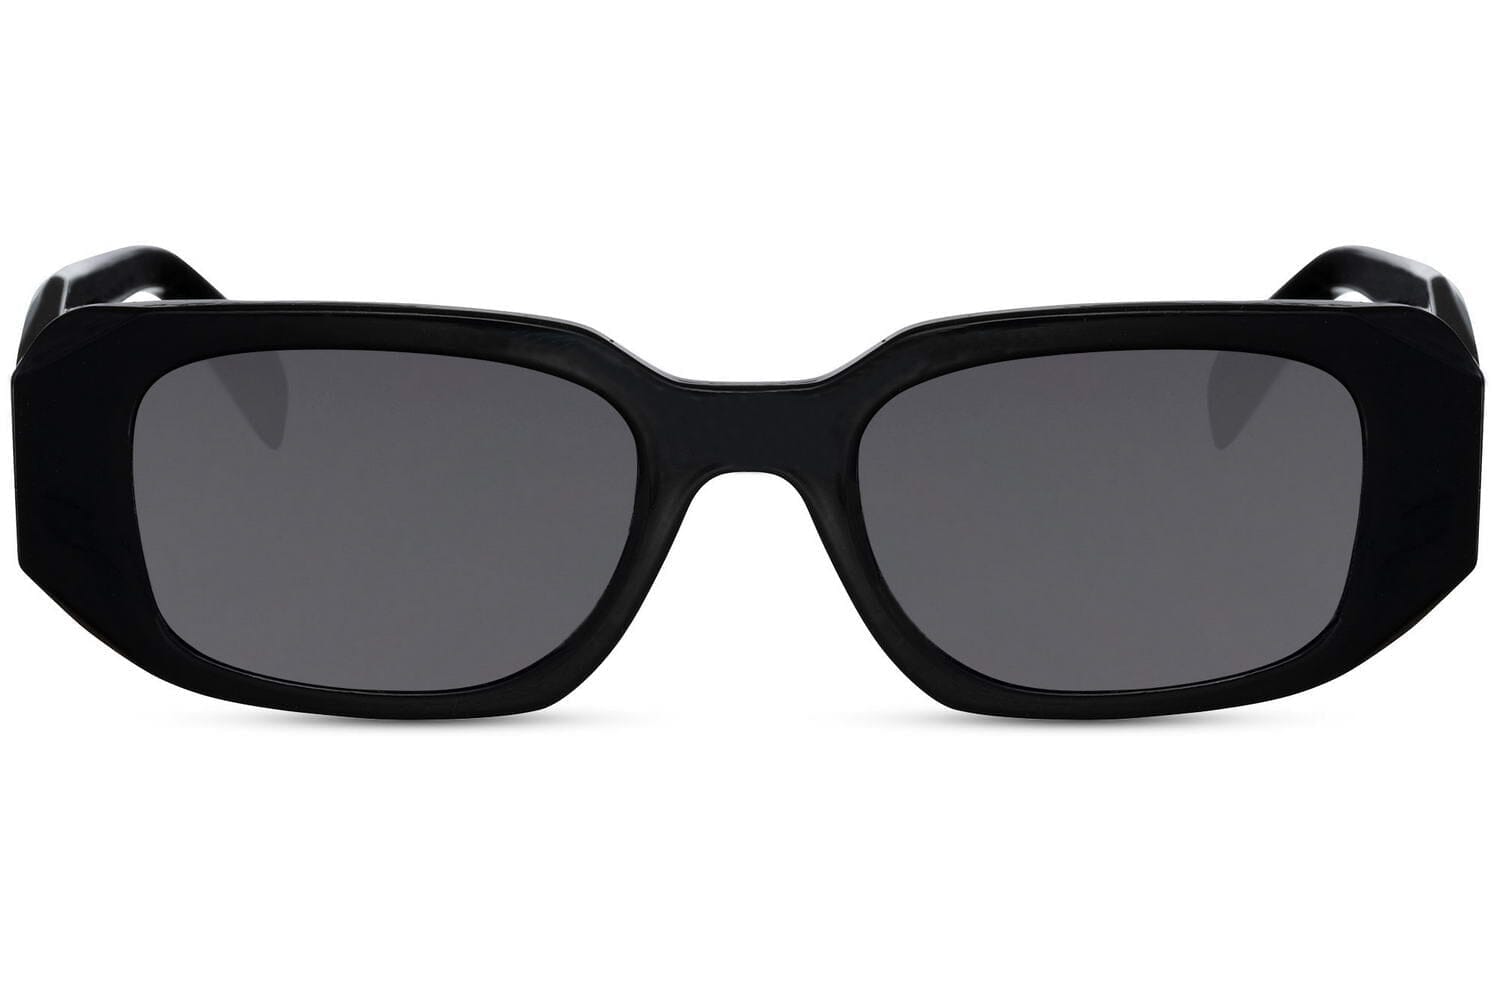 Black rectangle shades. Grey lenses. UV400 protected.